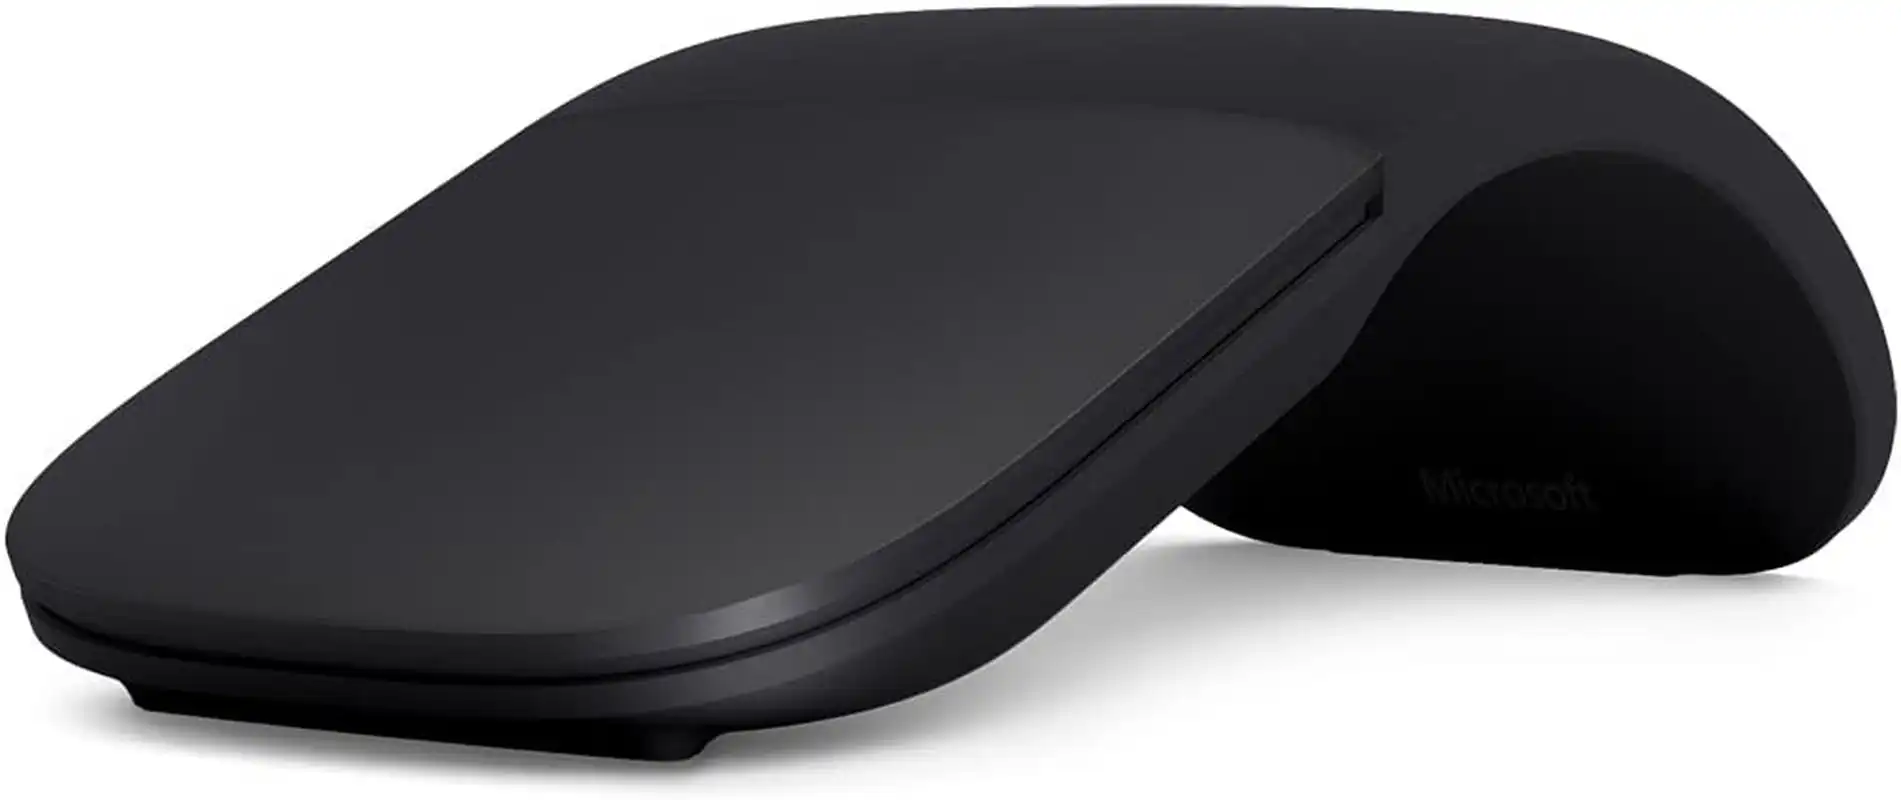 Microsoft Arc Mouse - Black. Sleek,Ergonomic Design, Ultra Slim and Lightweight, Bluetooth Mouse for Pc/Laptop,Desktop Works with Windows/Mac Computers